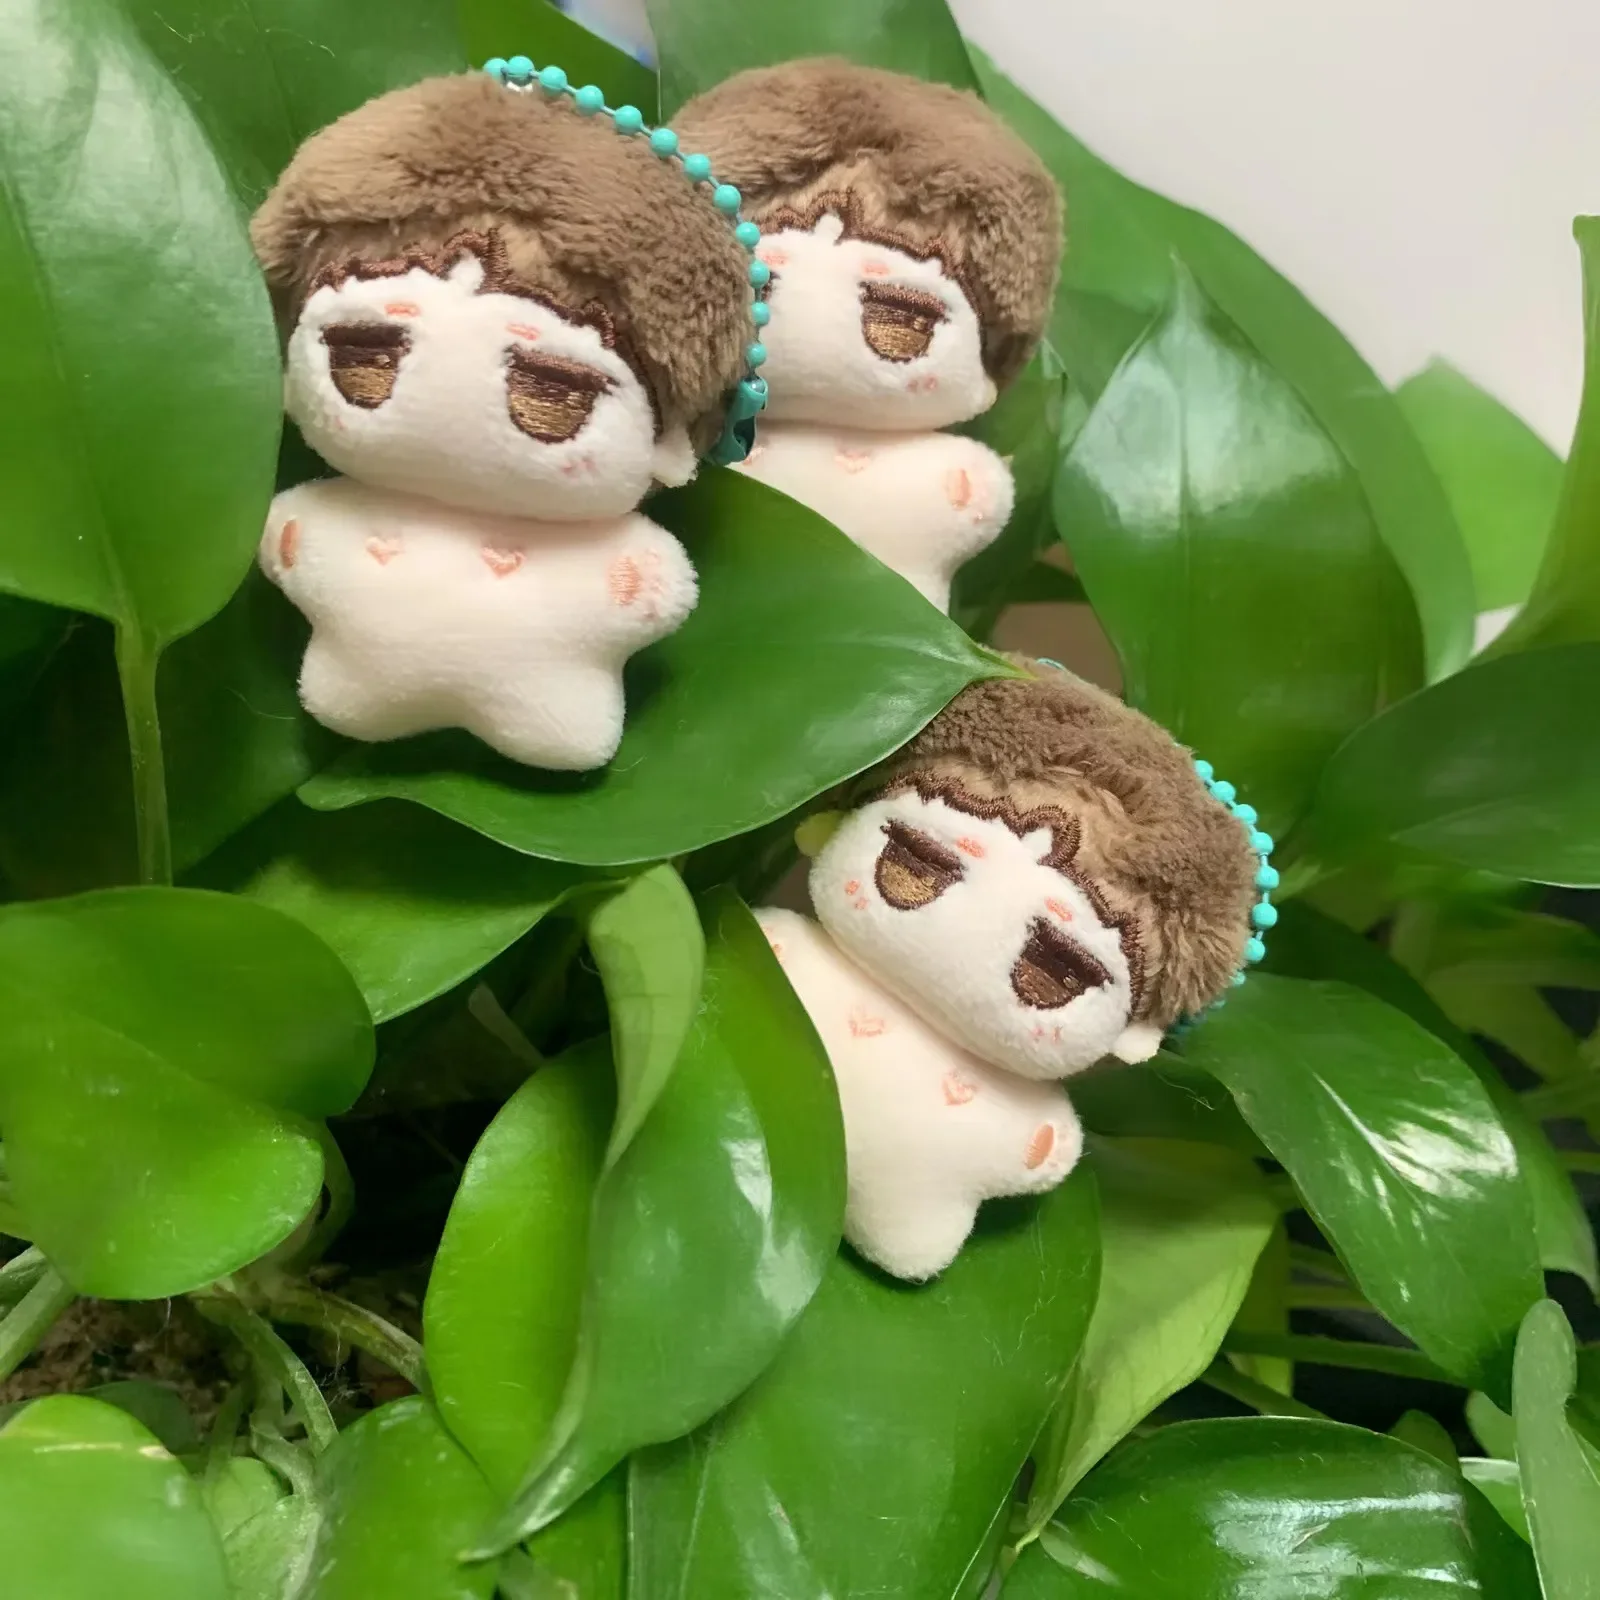 5cm Kawaii Idol Plush Cotton Dolls BJYX Naked Stuffed Mini Doll Soft Toys Schoolbag Decoration Key Chain Gifts for Fans Friends